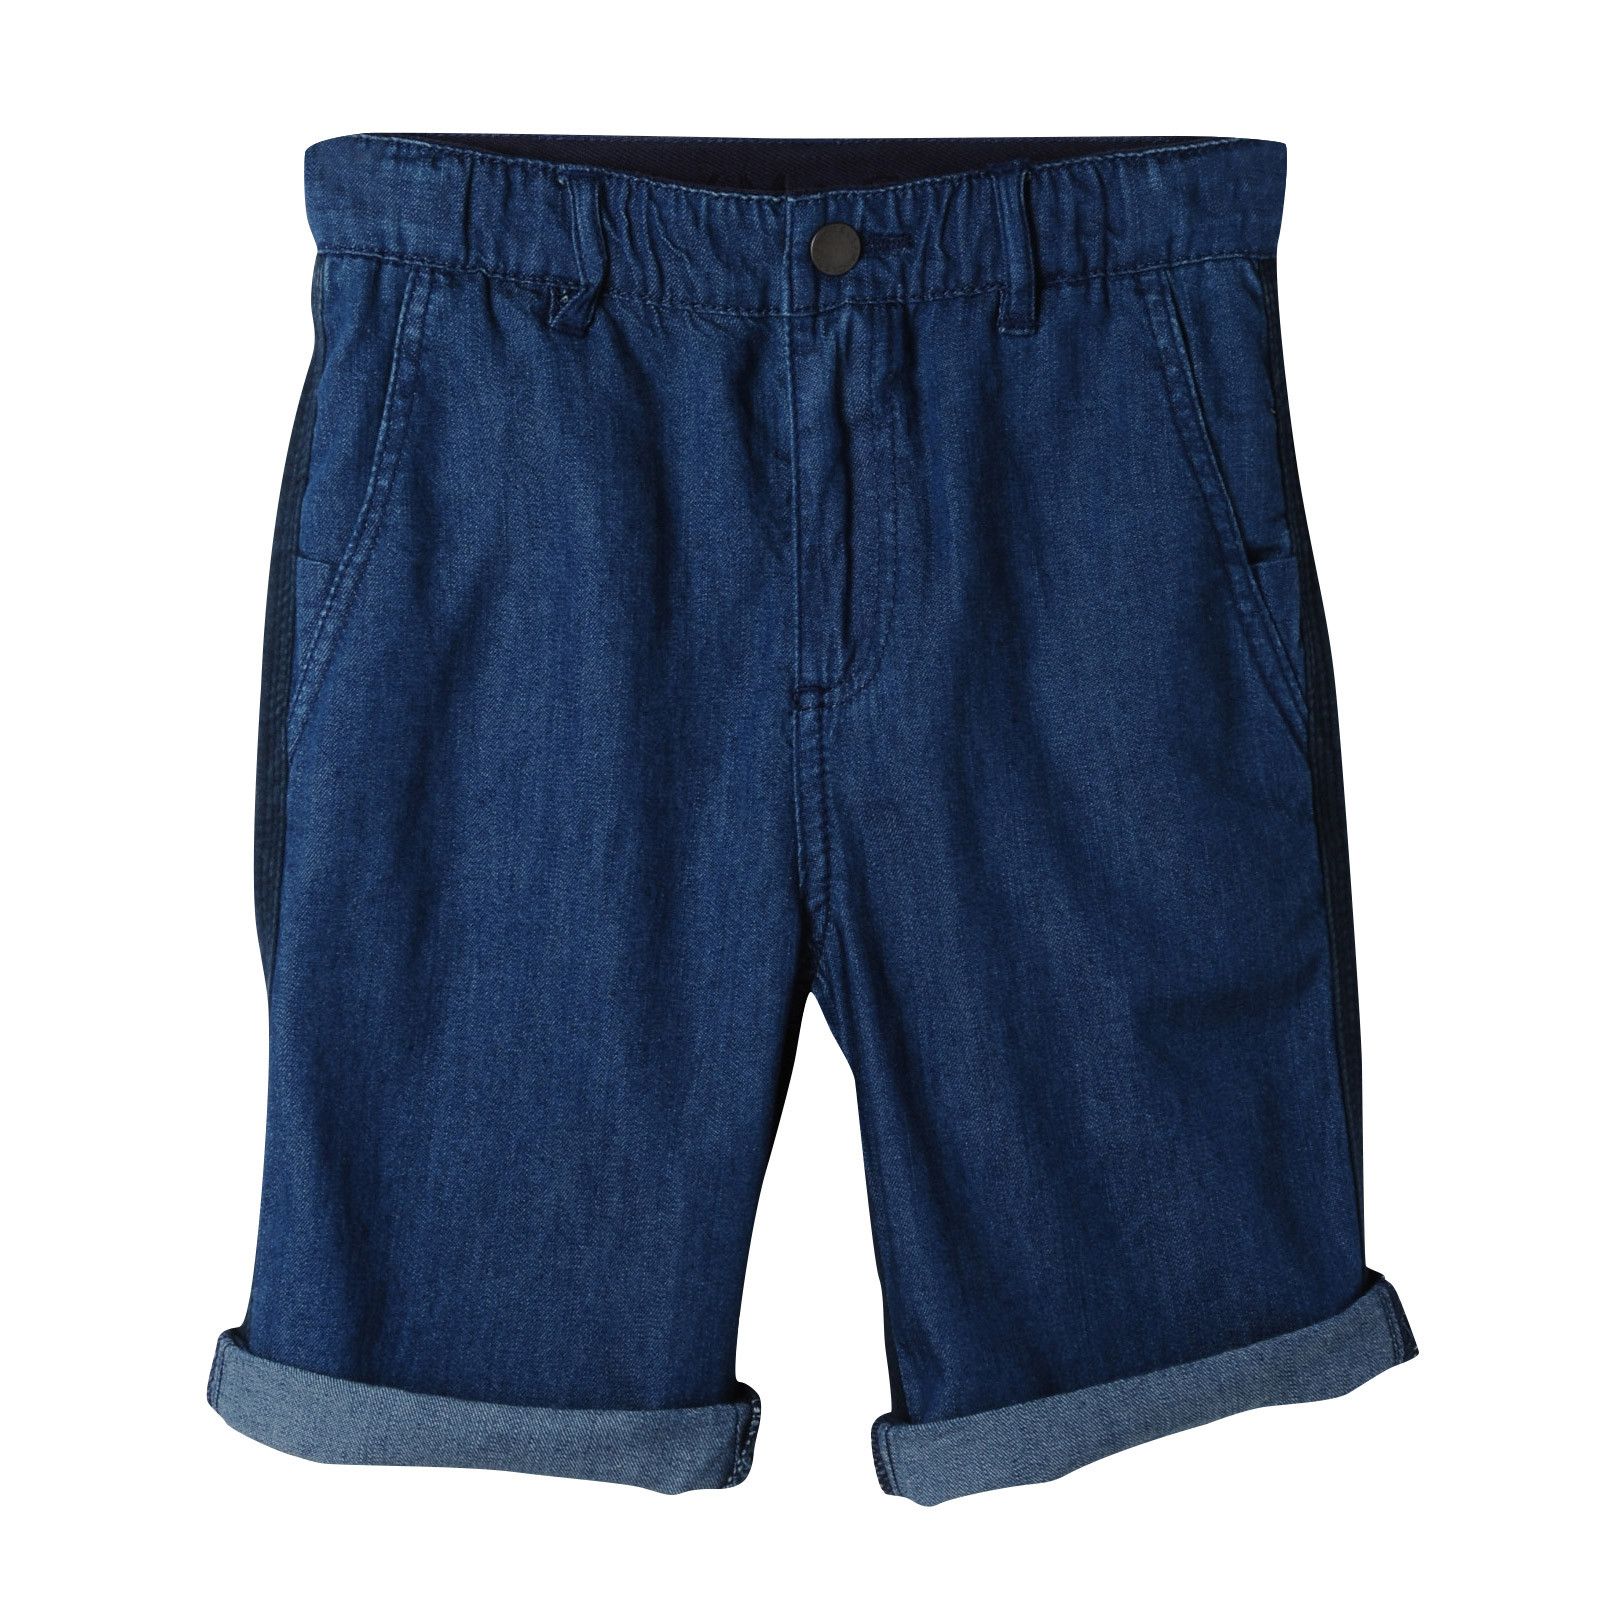 Boys Blue Cotton Denim Shorts With Turn Up Cuffs - CÉMAROSE | Children's Fashion Store - 1